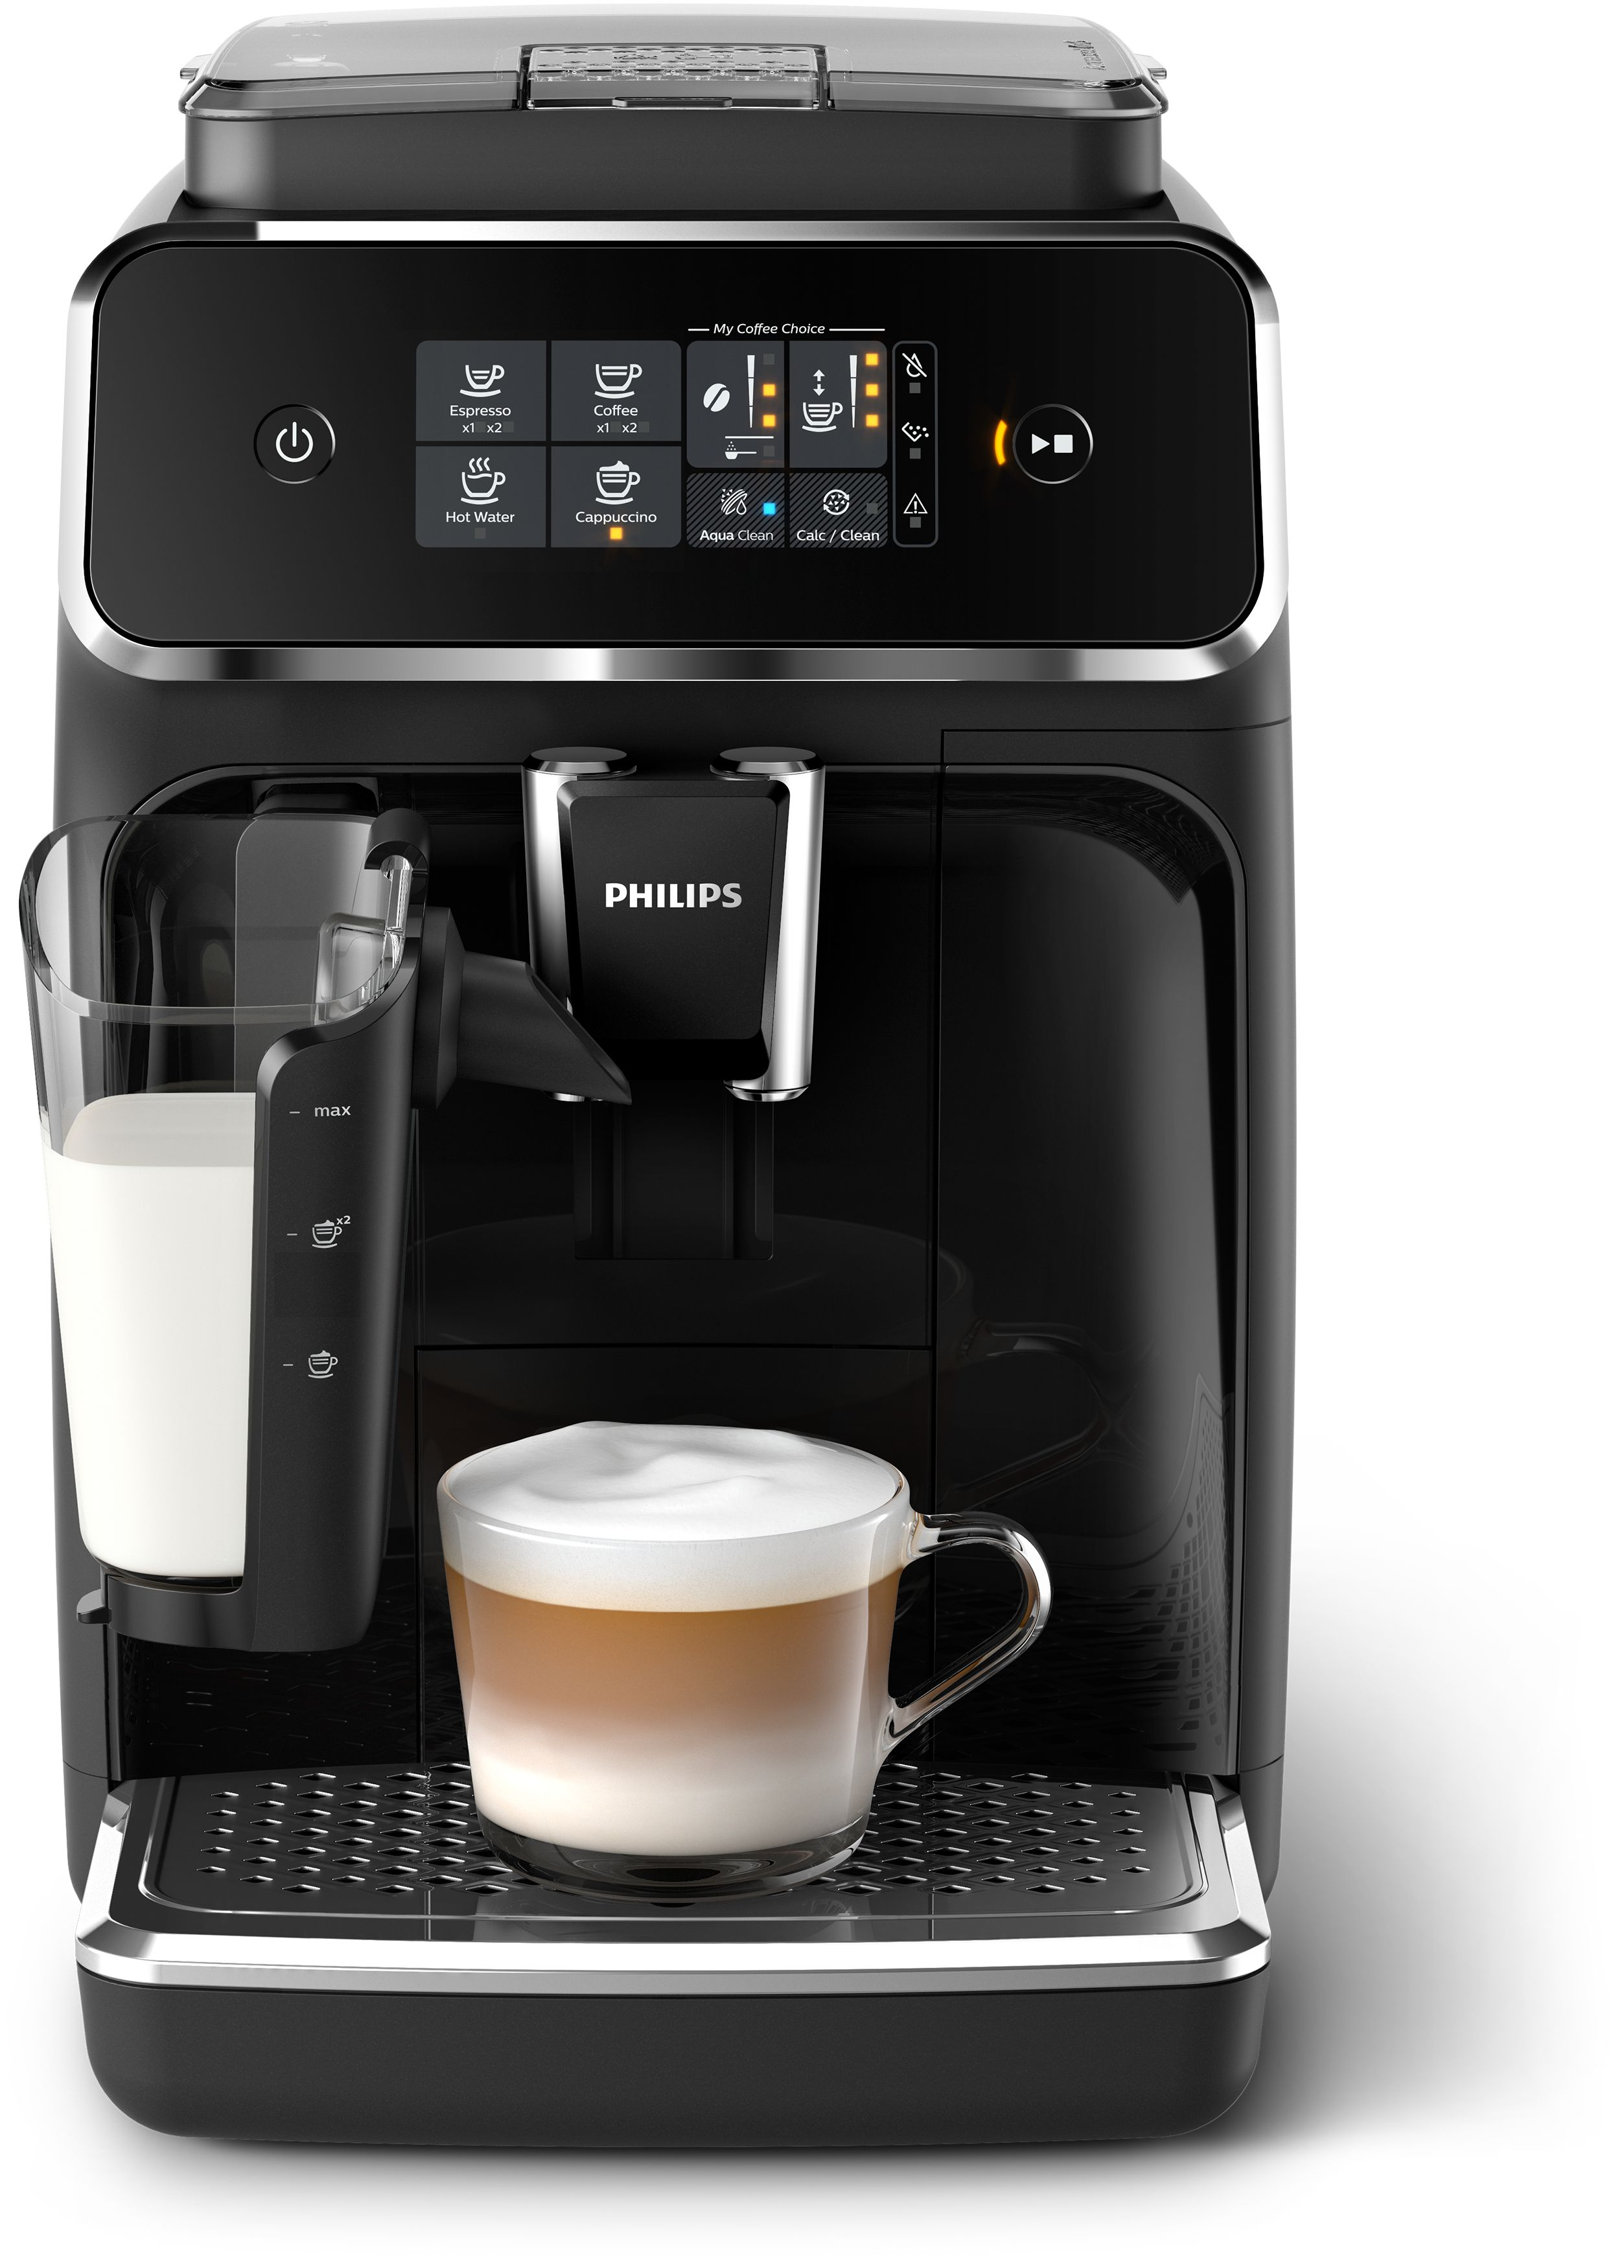 Philips 123 coffee maker